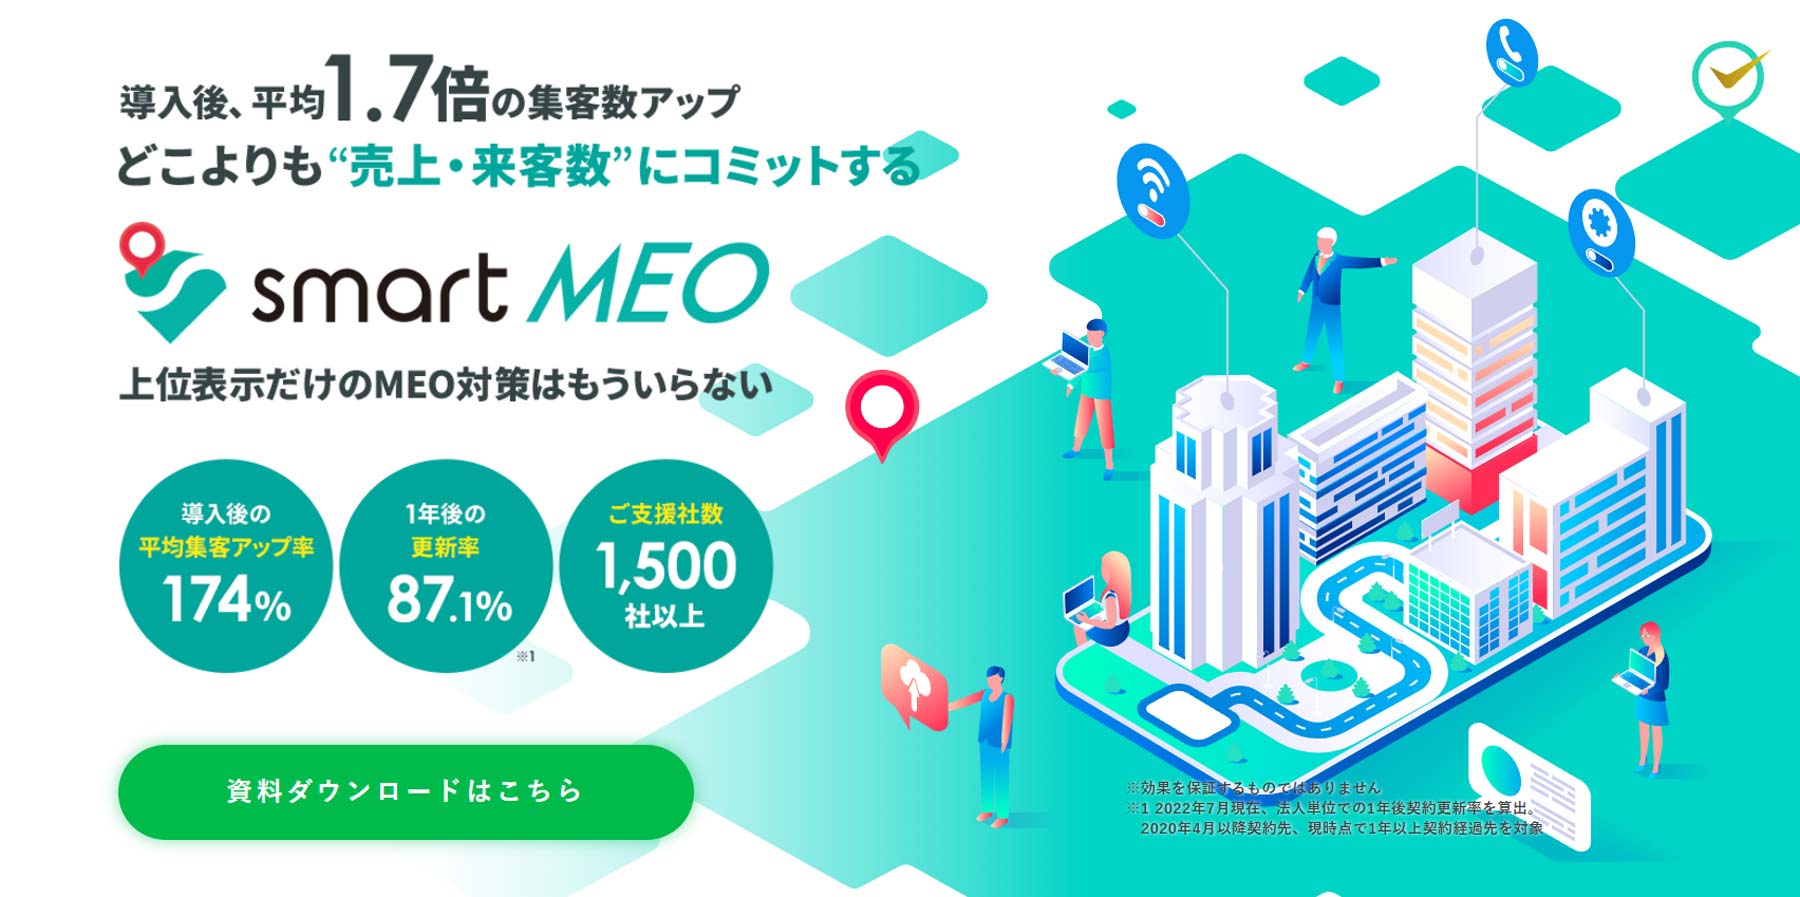 smart MEO公式Webサイト